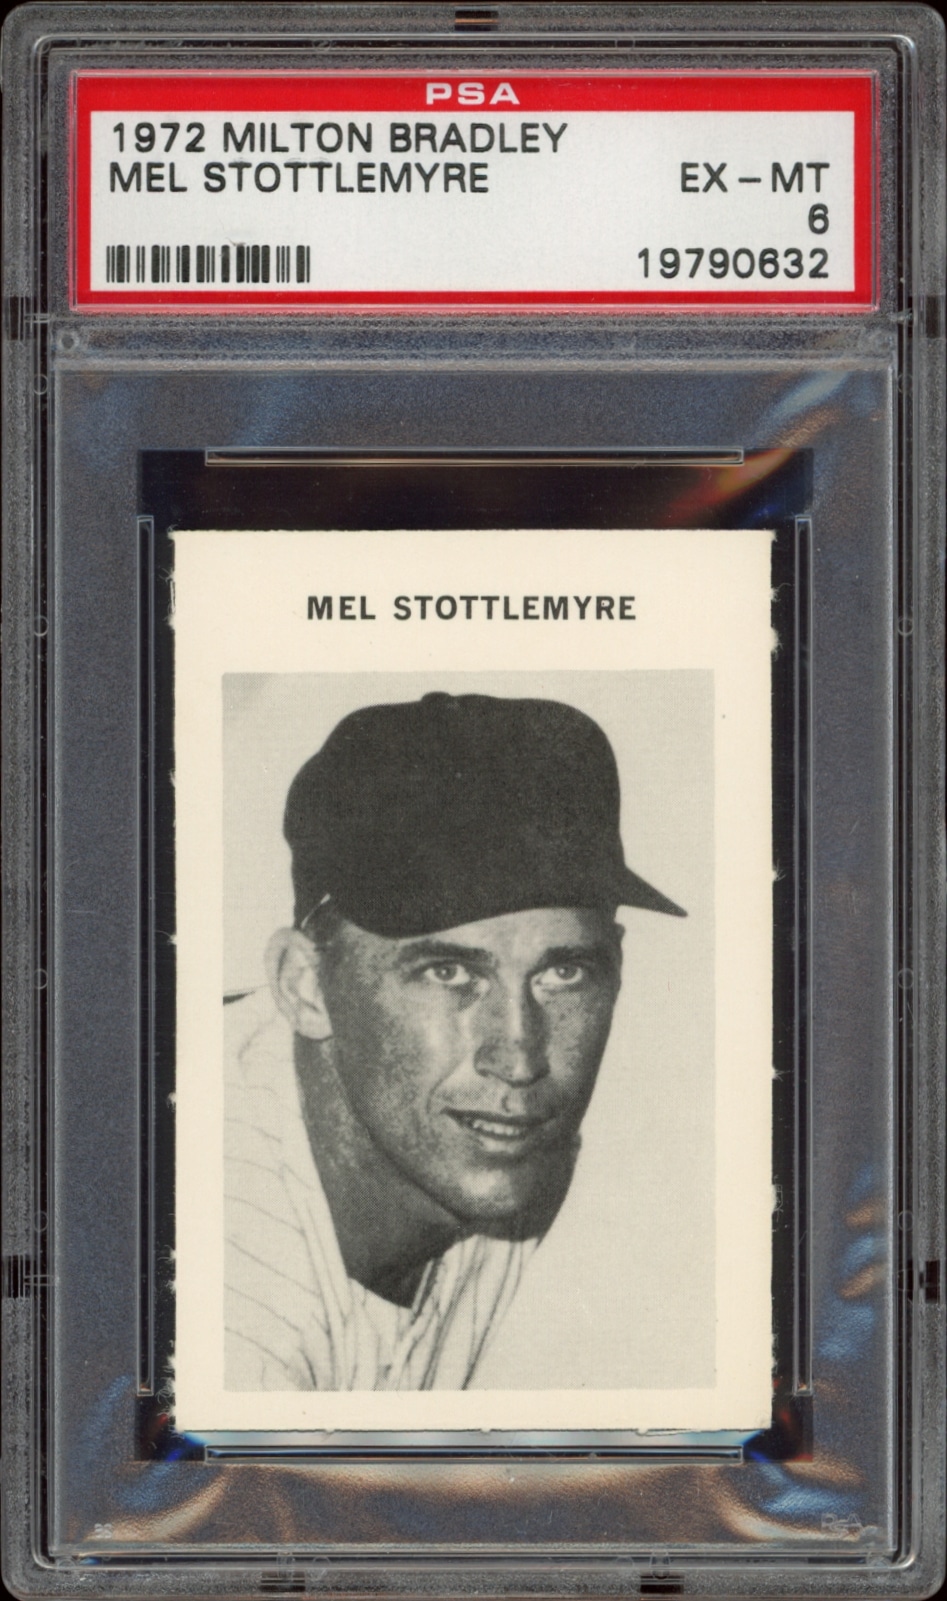 PSA 6 graded 1972 Milton Bradley card featuring baseball player Mel Stottlemyre.